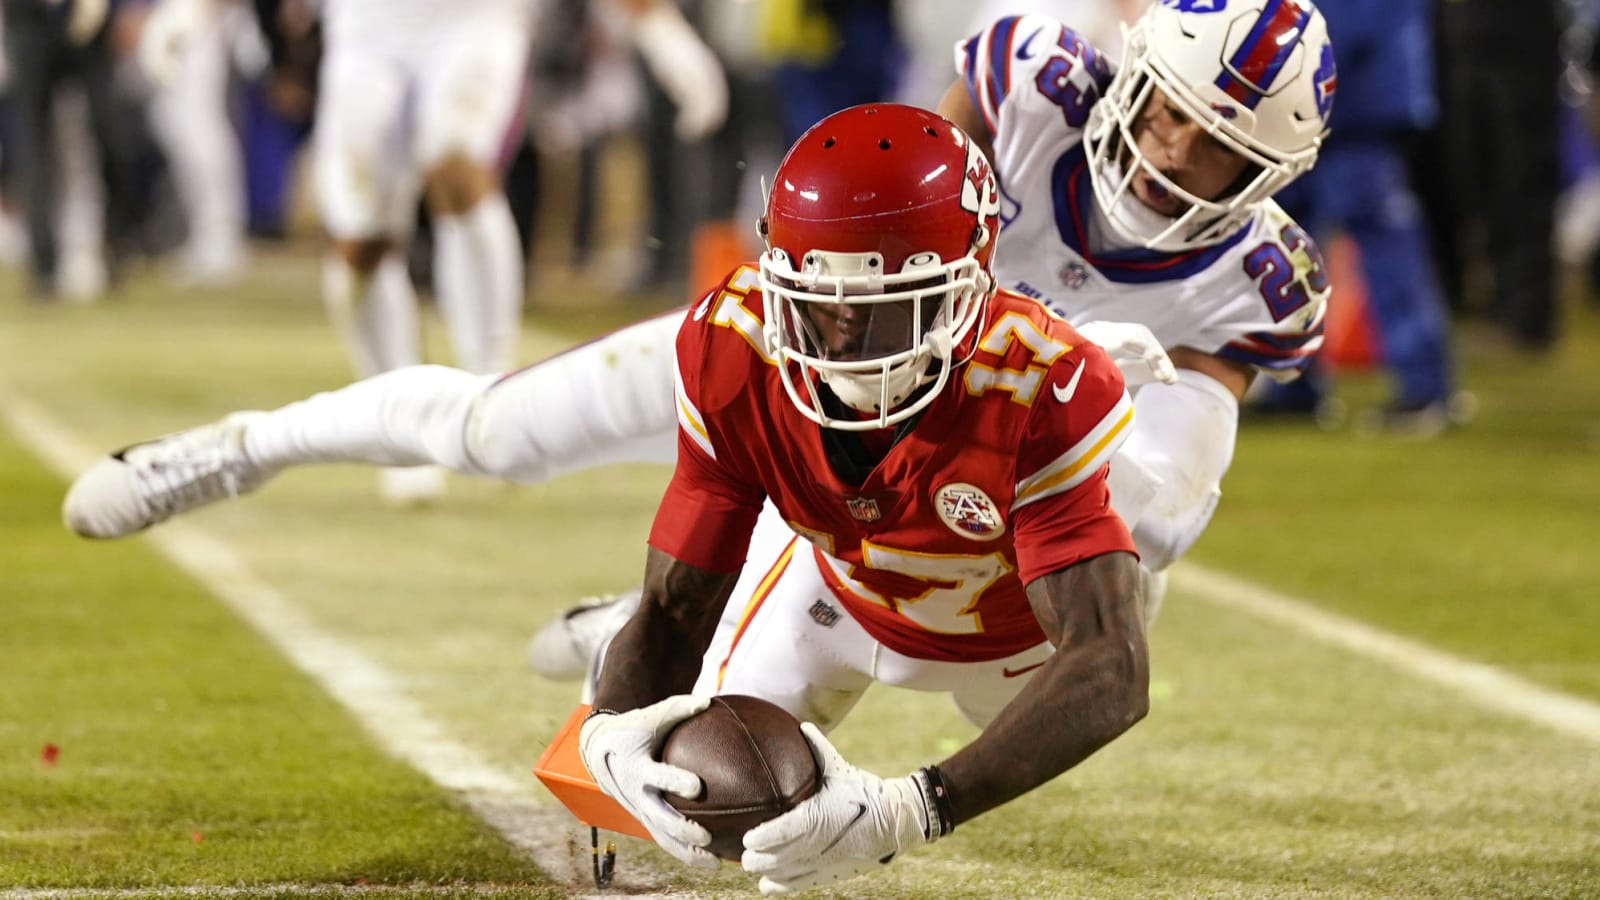 Watch: Chiefs’ Mecole Hardman with insane TD run against Bills